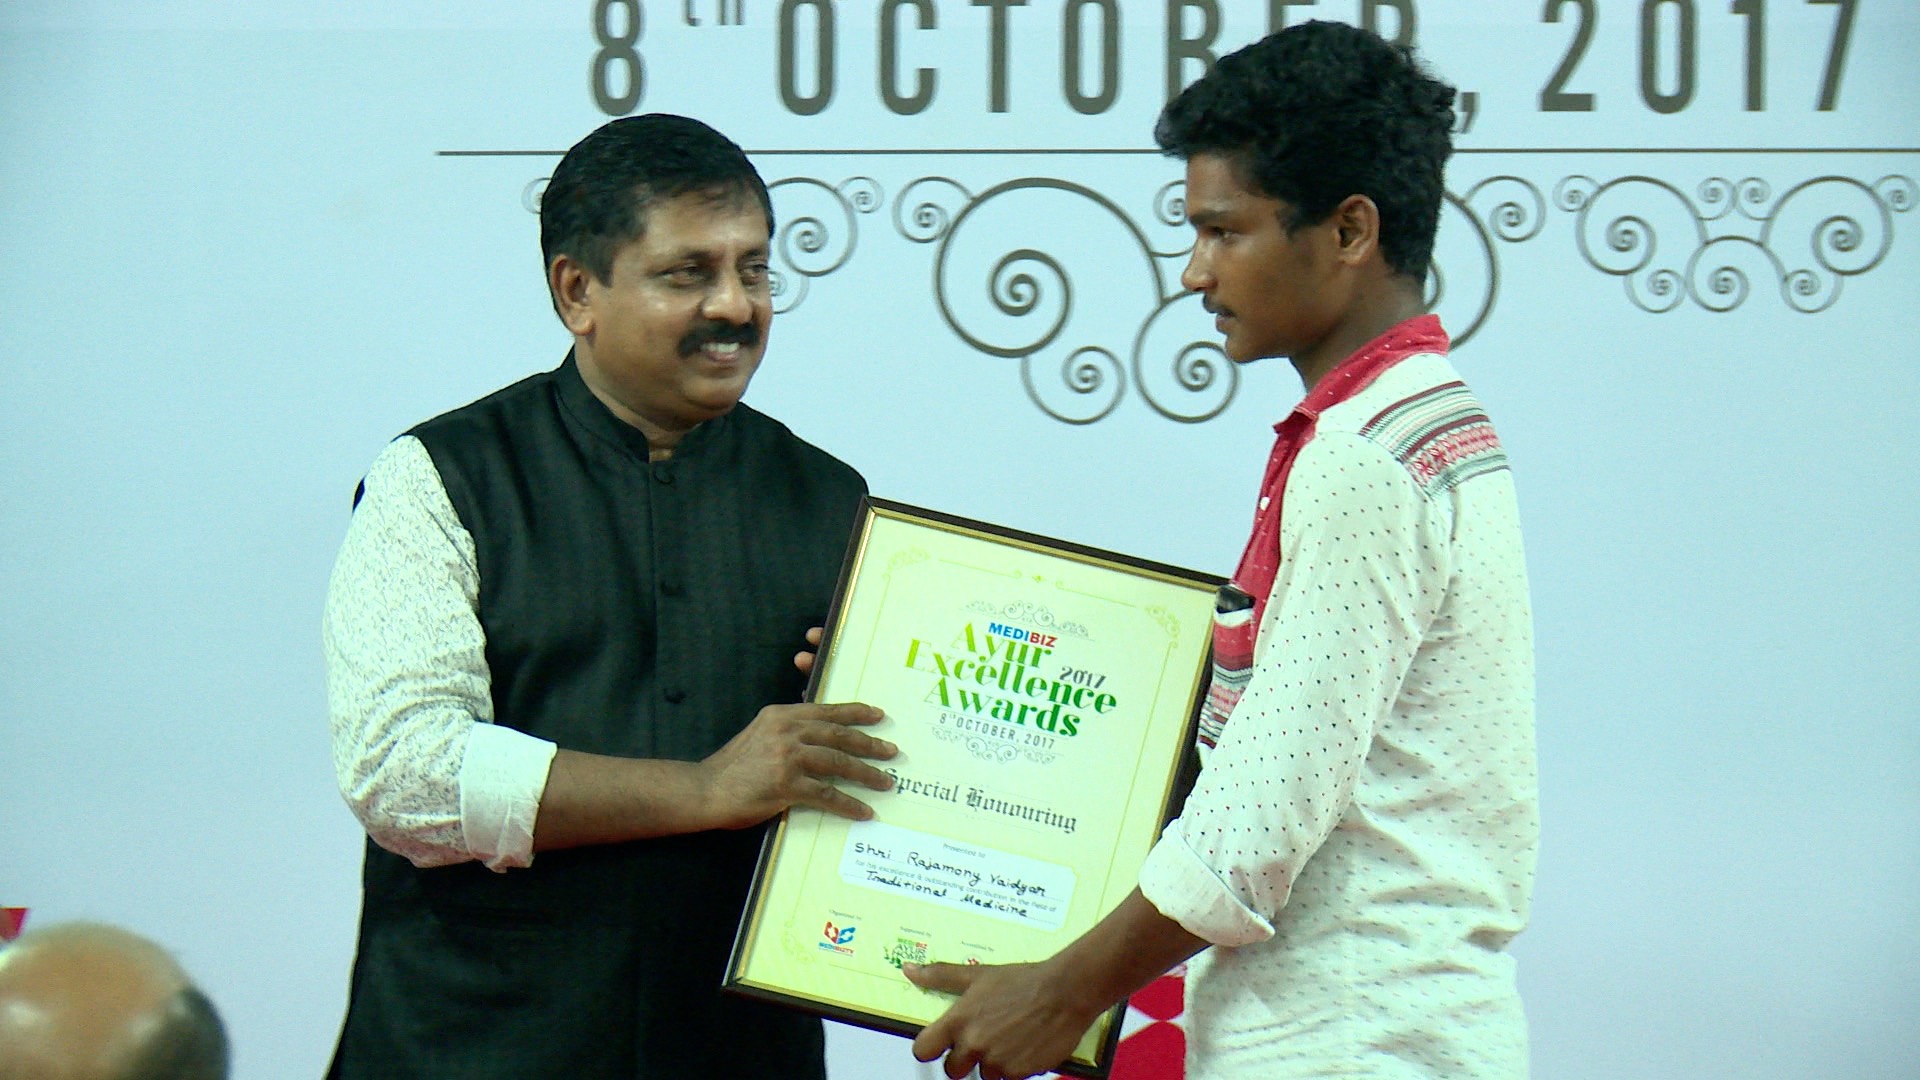 Medibiz Ayur Excellence Award - Special Honouring - Traditional Vaidyans - Rajamony Vaidyar